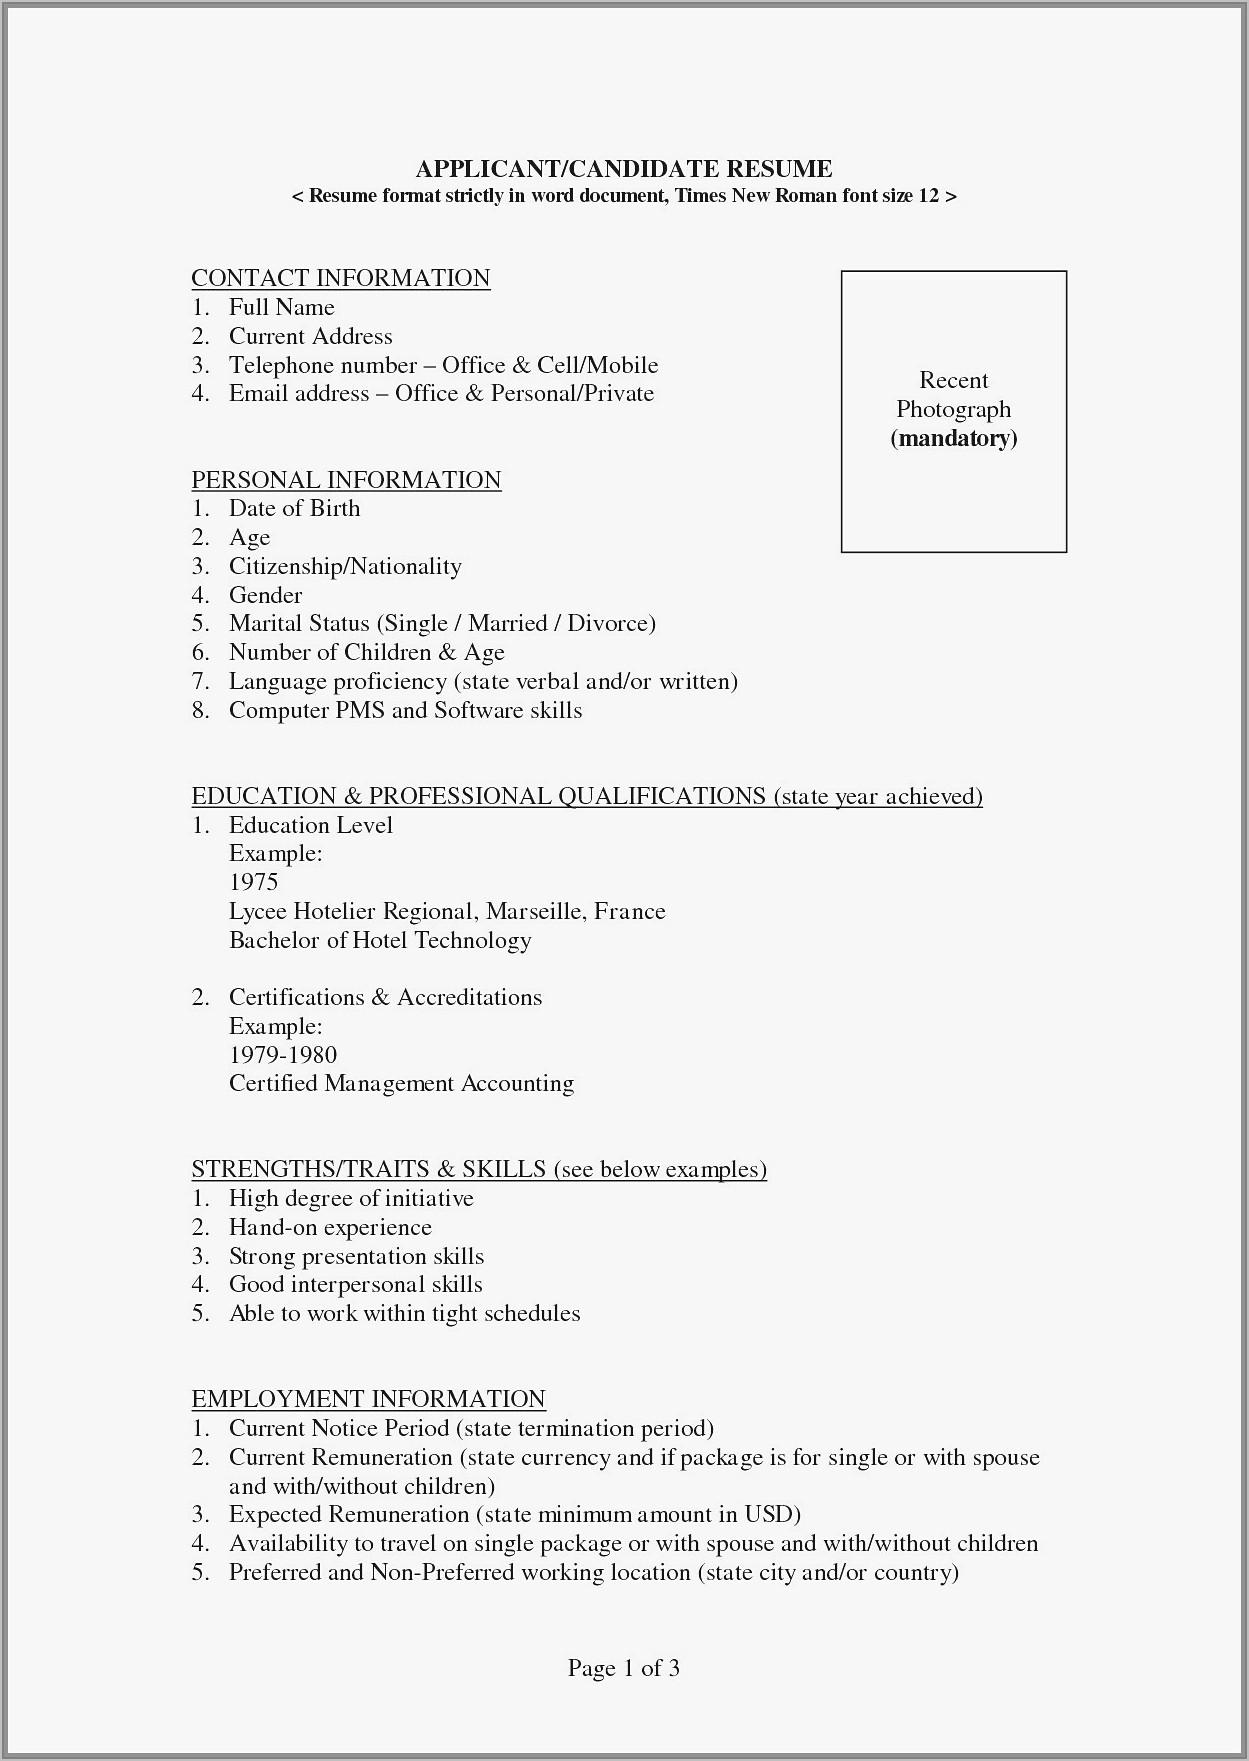 Resume For Nursing Assistant Student